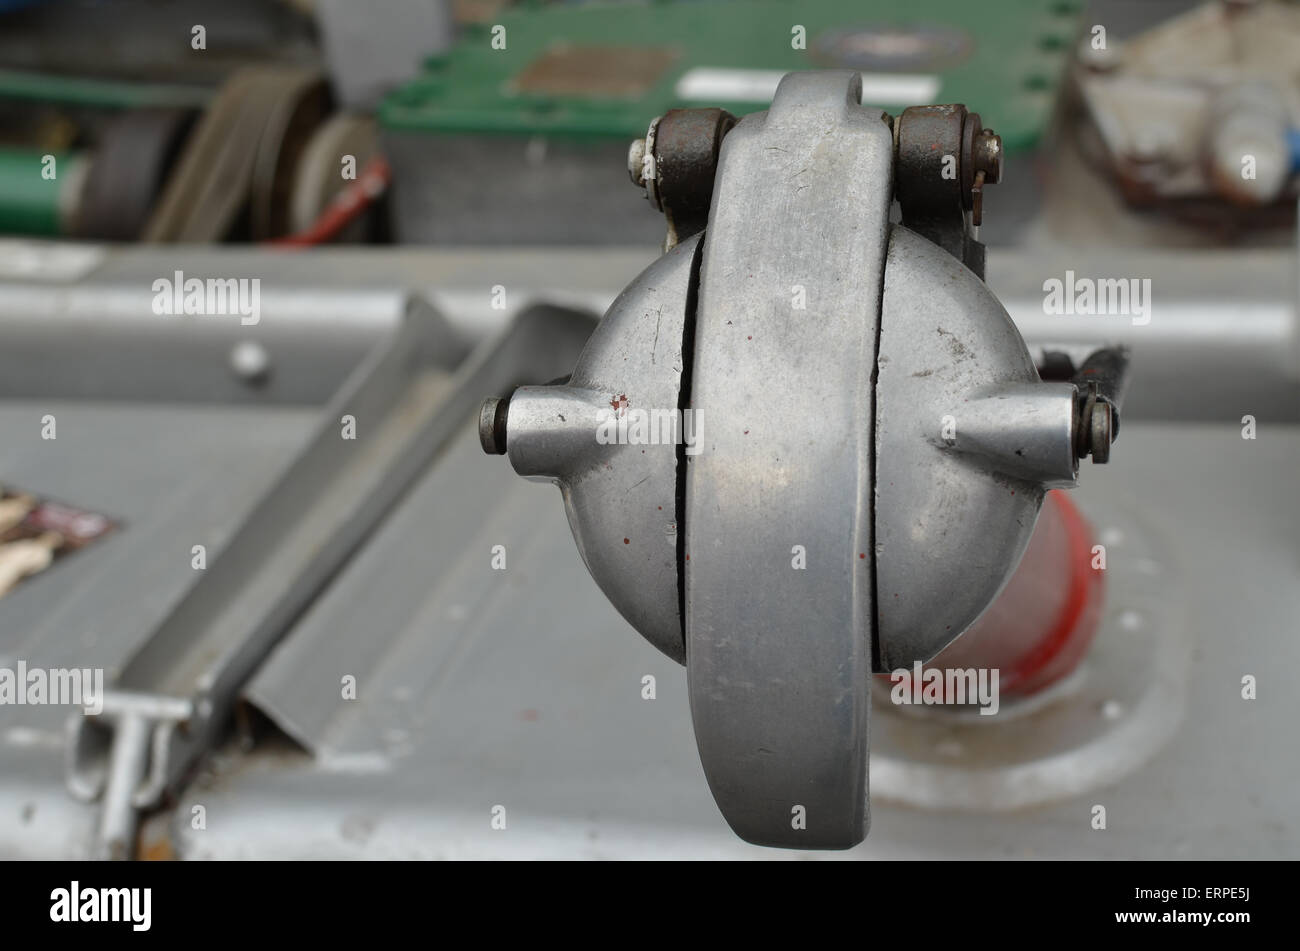 Close image of a vehicle fuel filler cap. Stock Photo